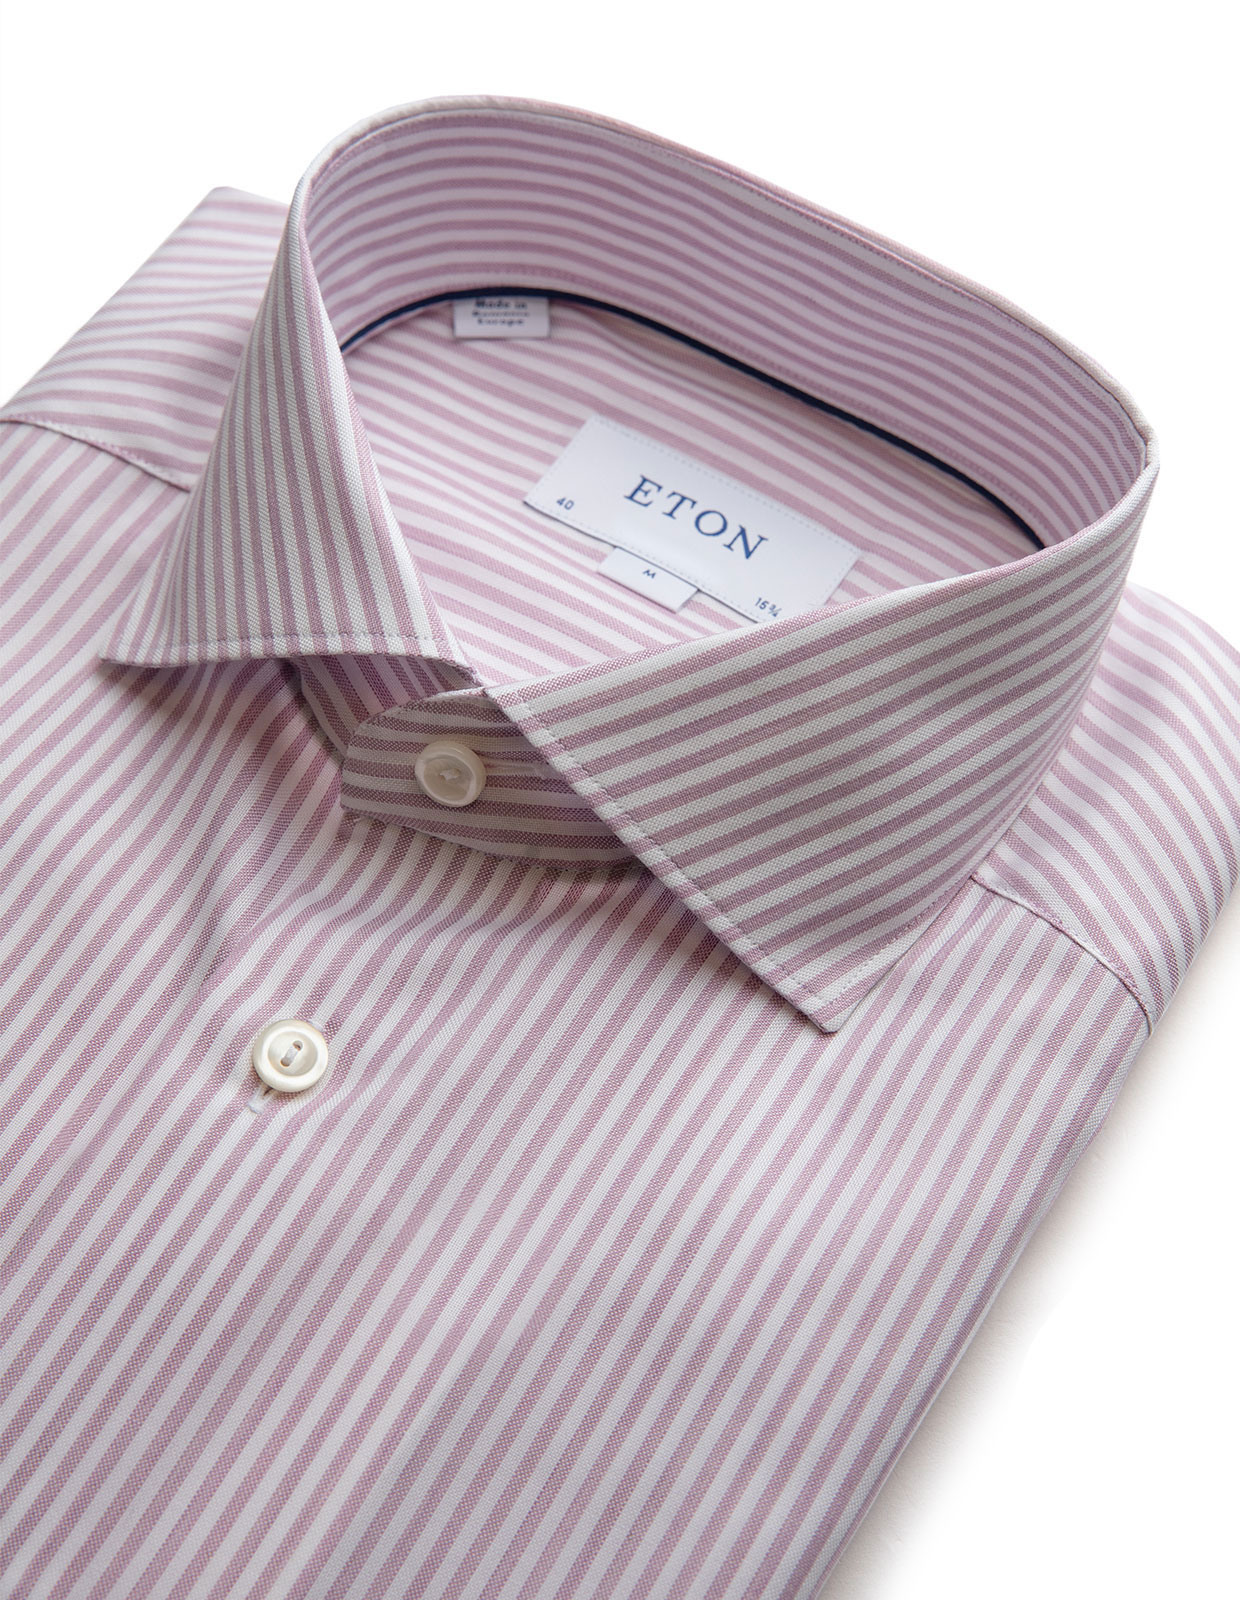 Slim Fit Striped Oxford Shirt Pink/White